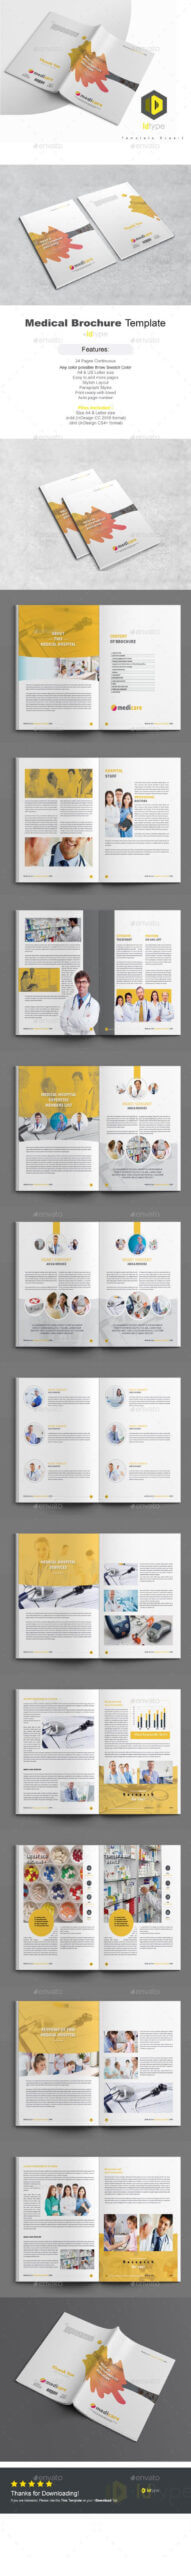 Medical Clinic Creative Brochure Magazine | Medical Design In Medical Office Brochure Templates